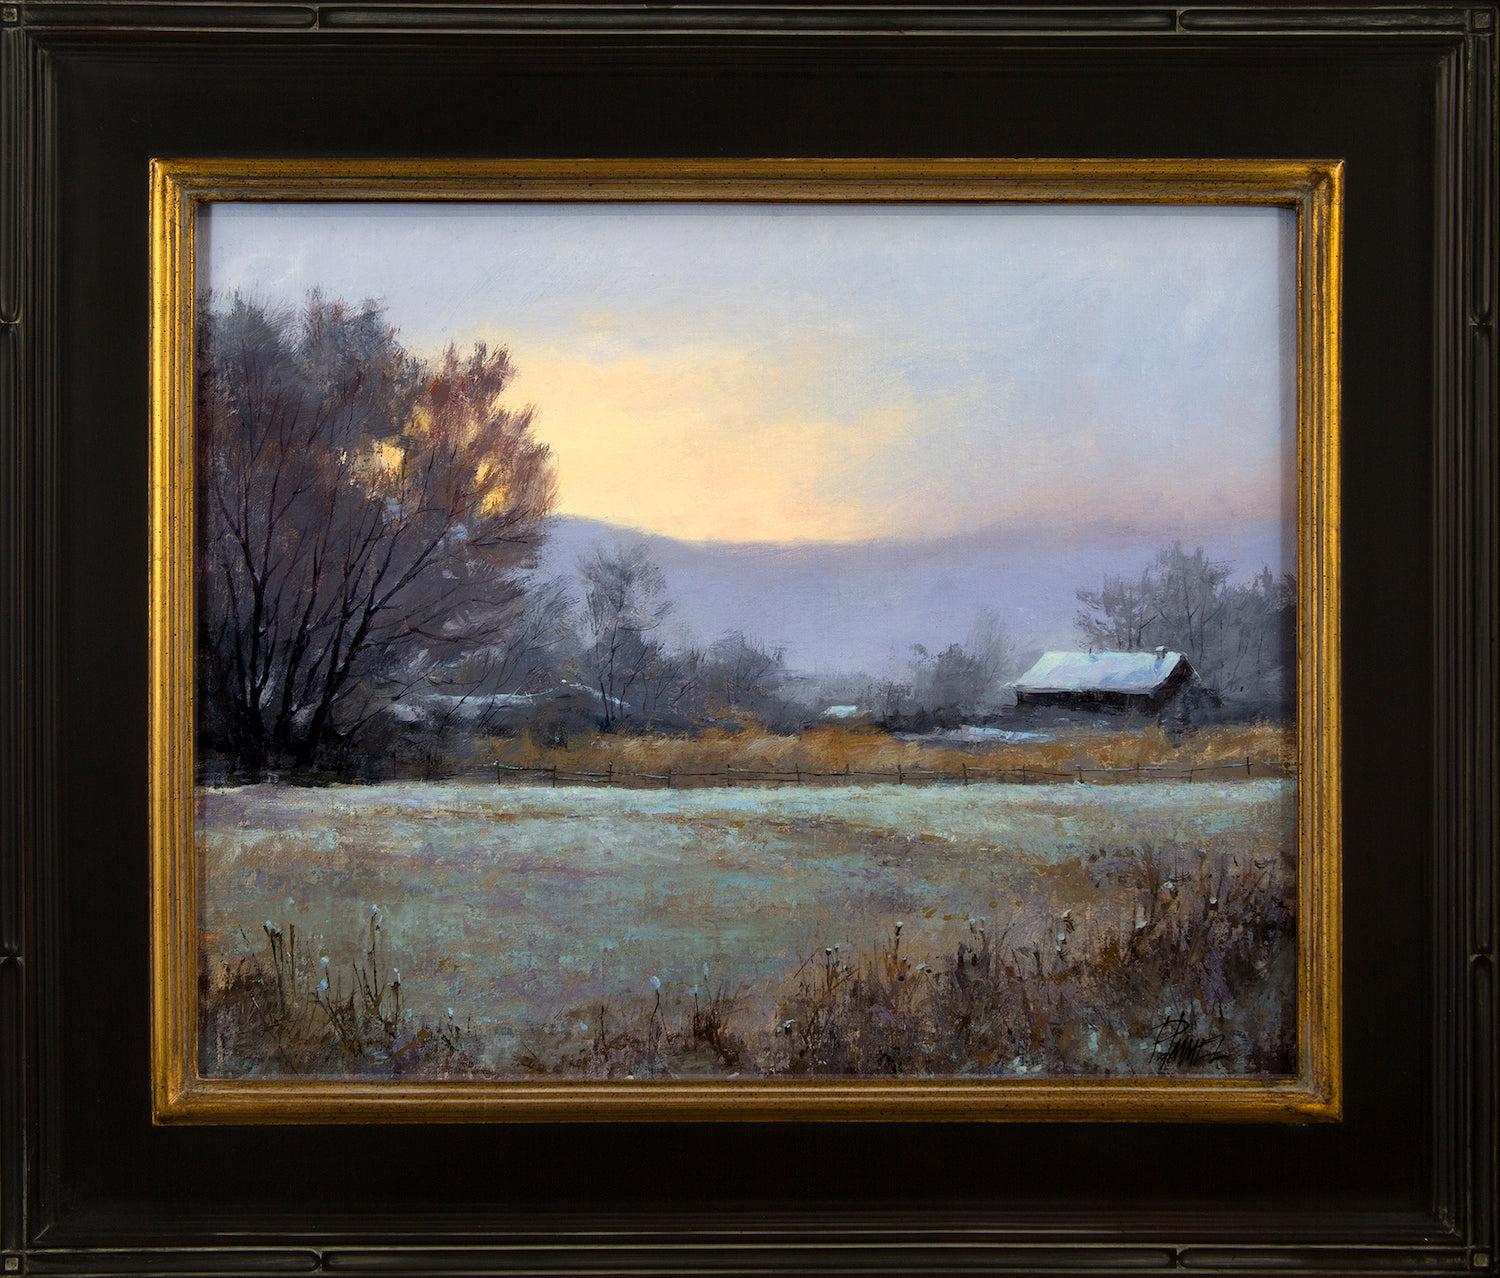 Solstice Sunrise-Painting-Peggy Immel-Sorrel Sky Gallery